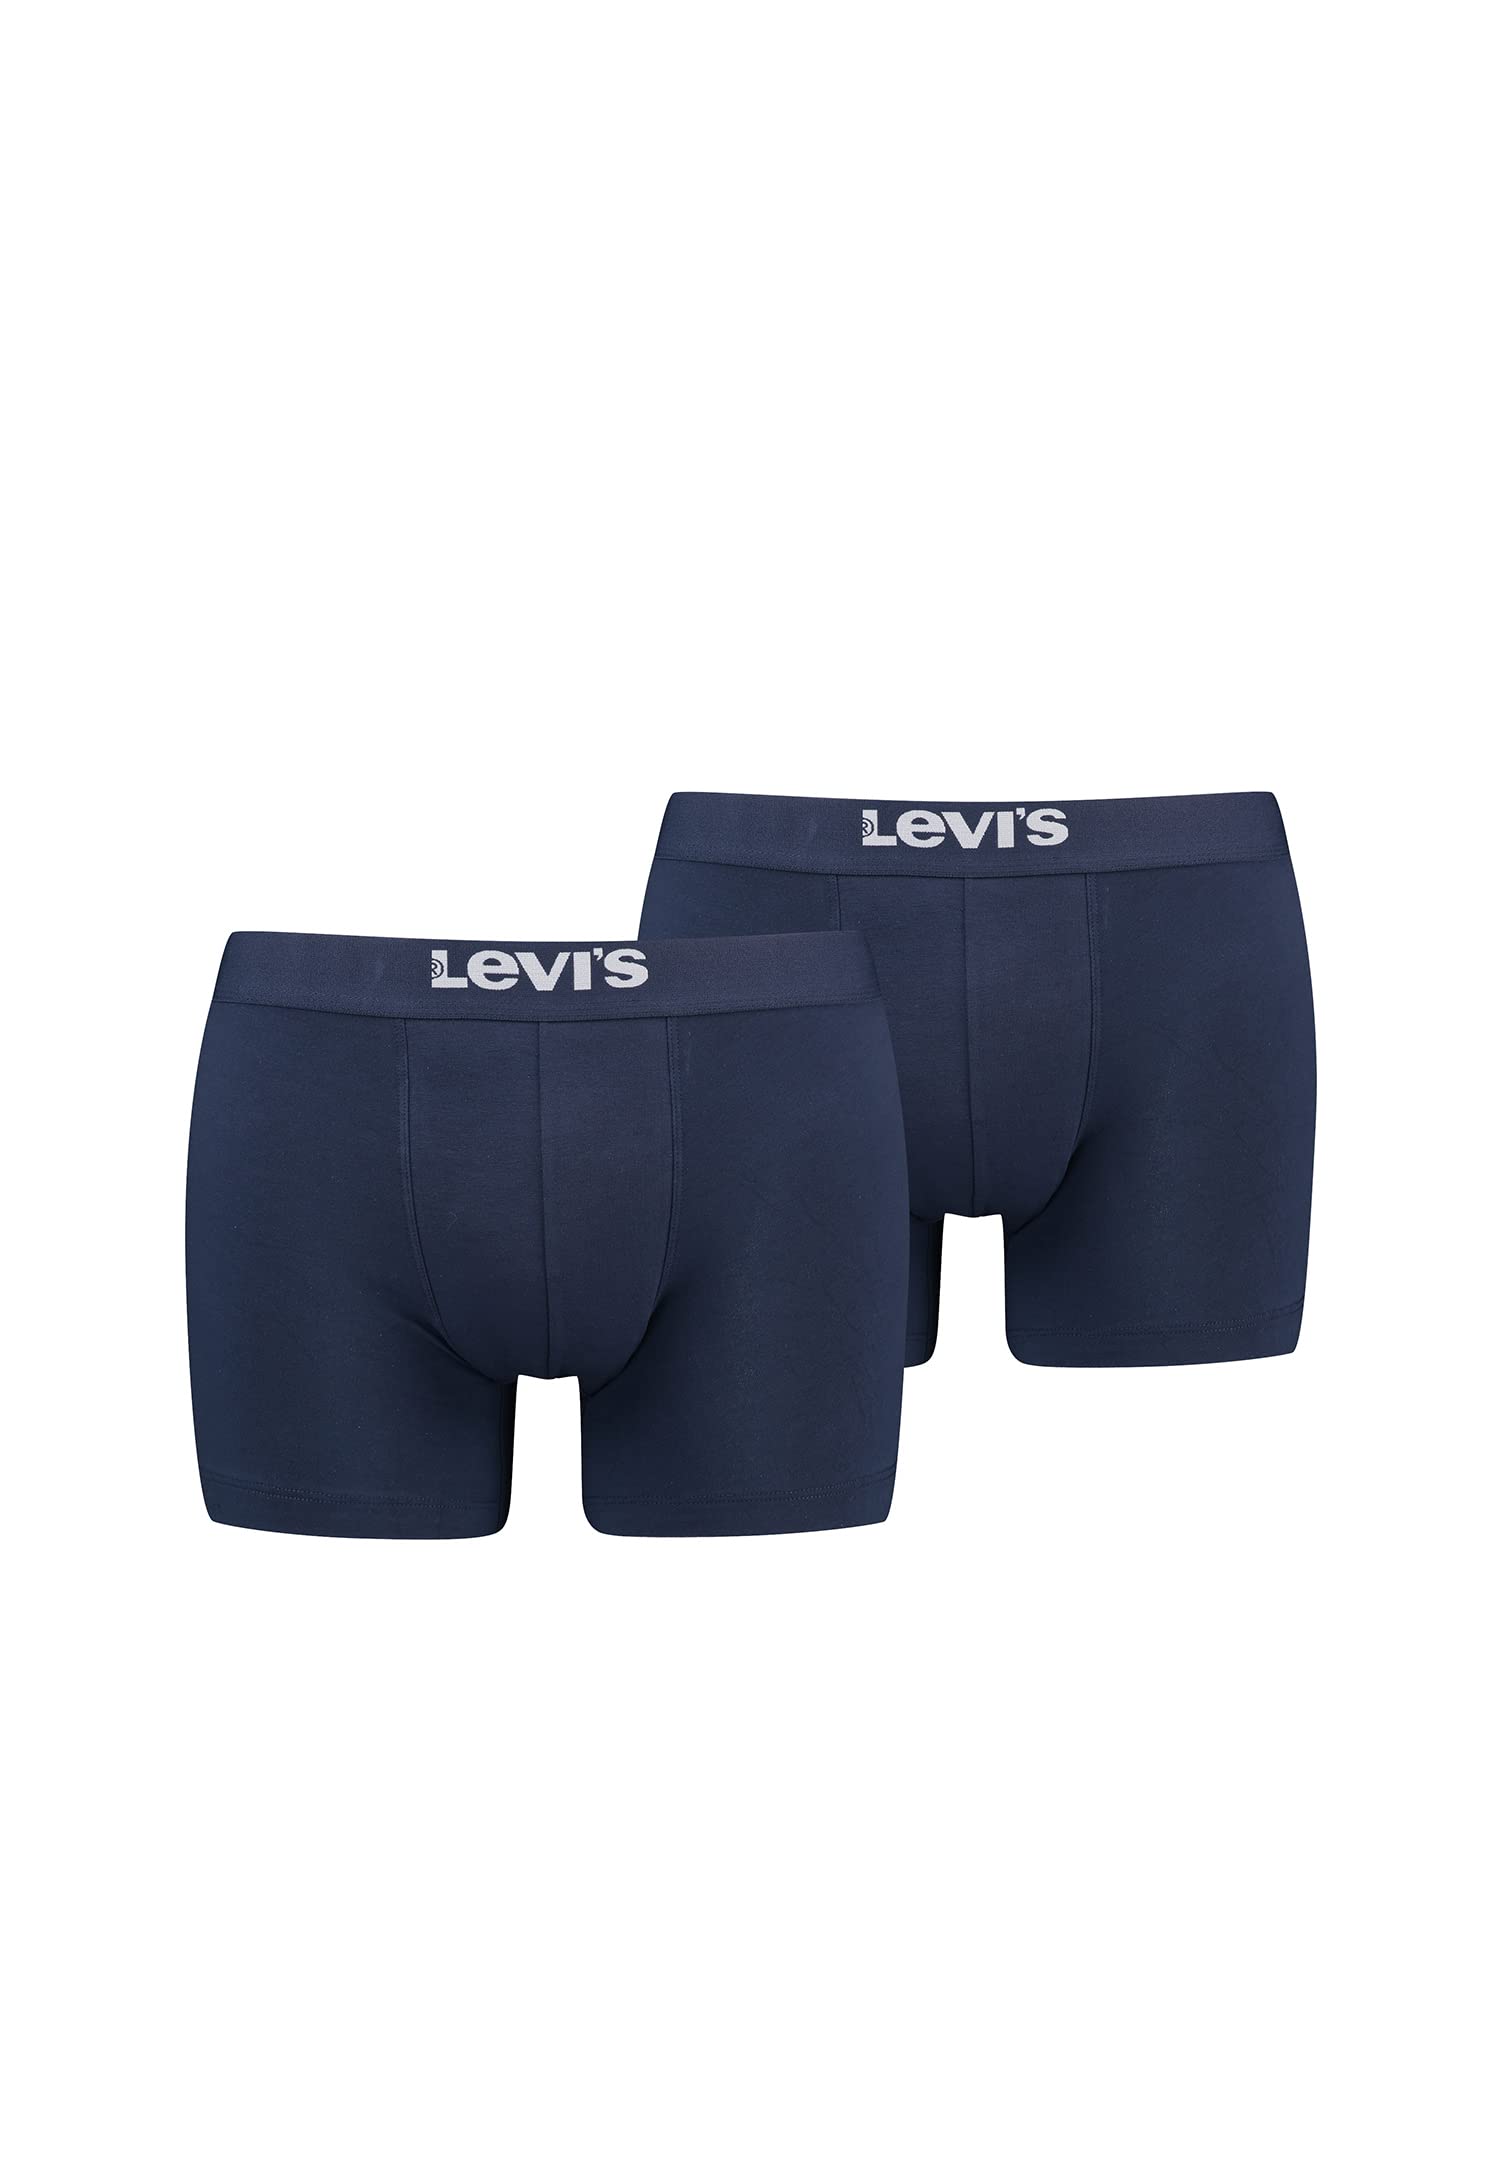 Levi's Herren Solid Basic Boxer, Navy, XXL